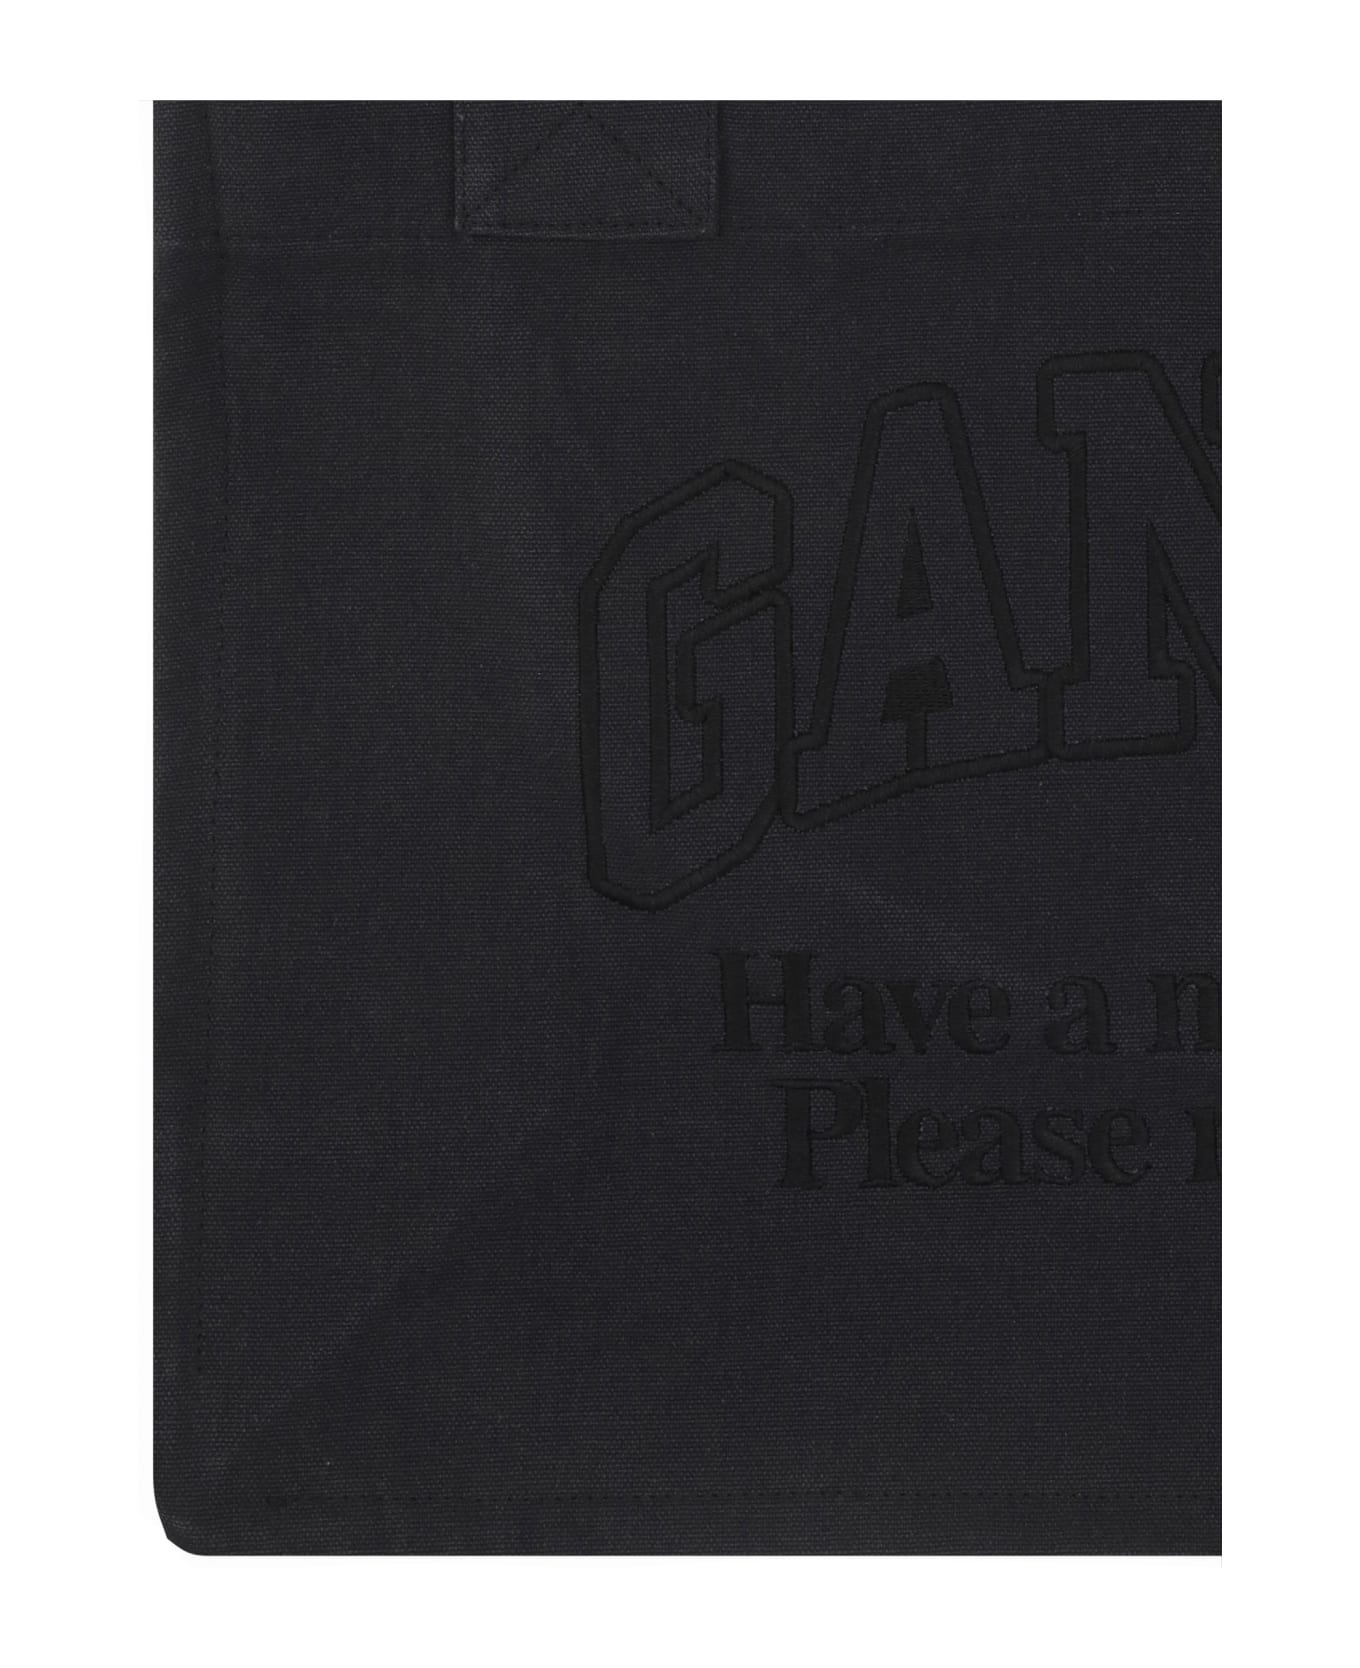 Ganni Easy Shopper Handbag - BLACK トートバッグ